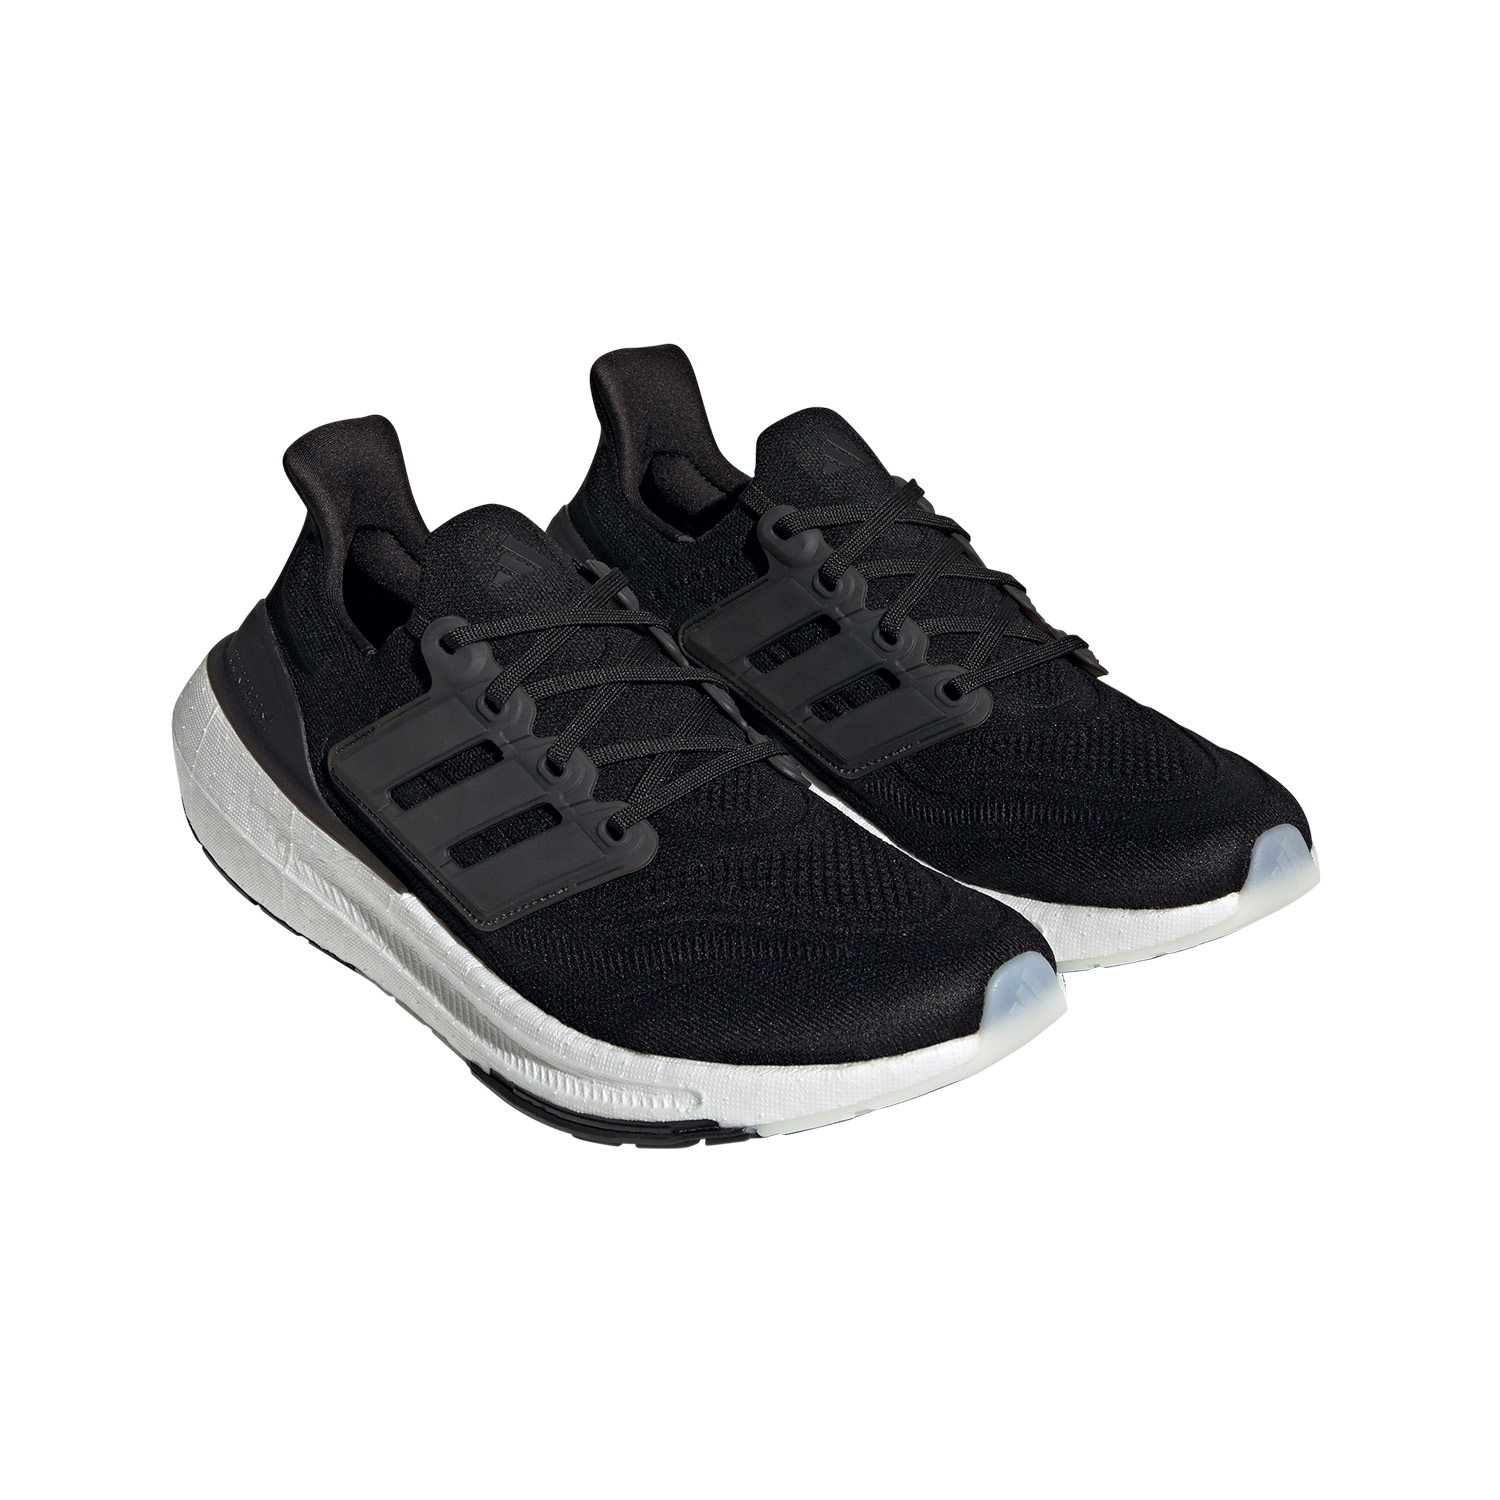 adidas Ultraboost Light Men's Running Shoes - Core Black